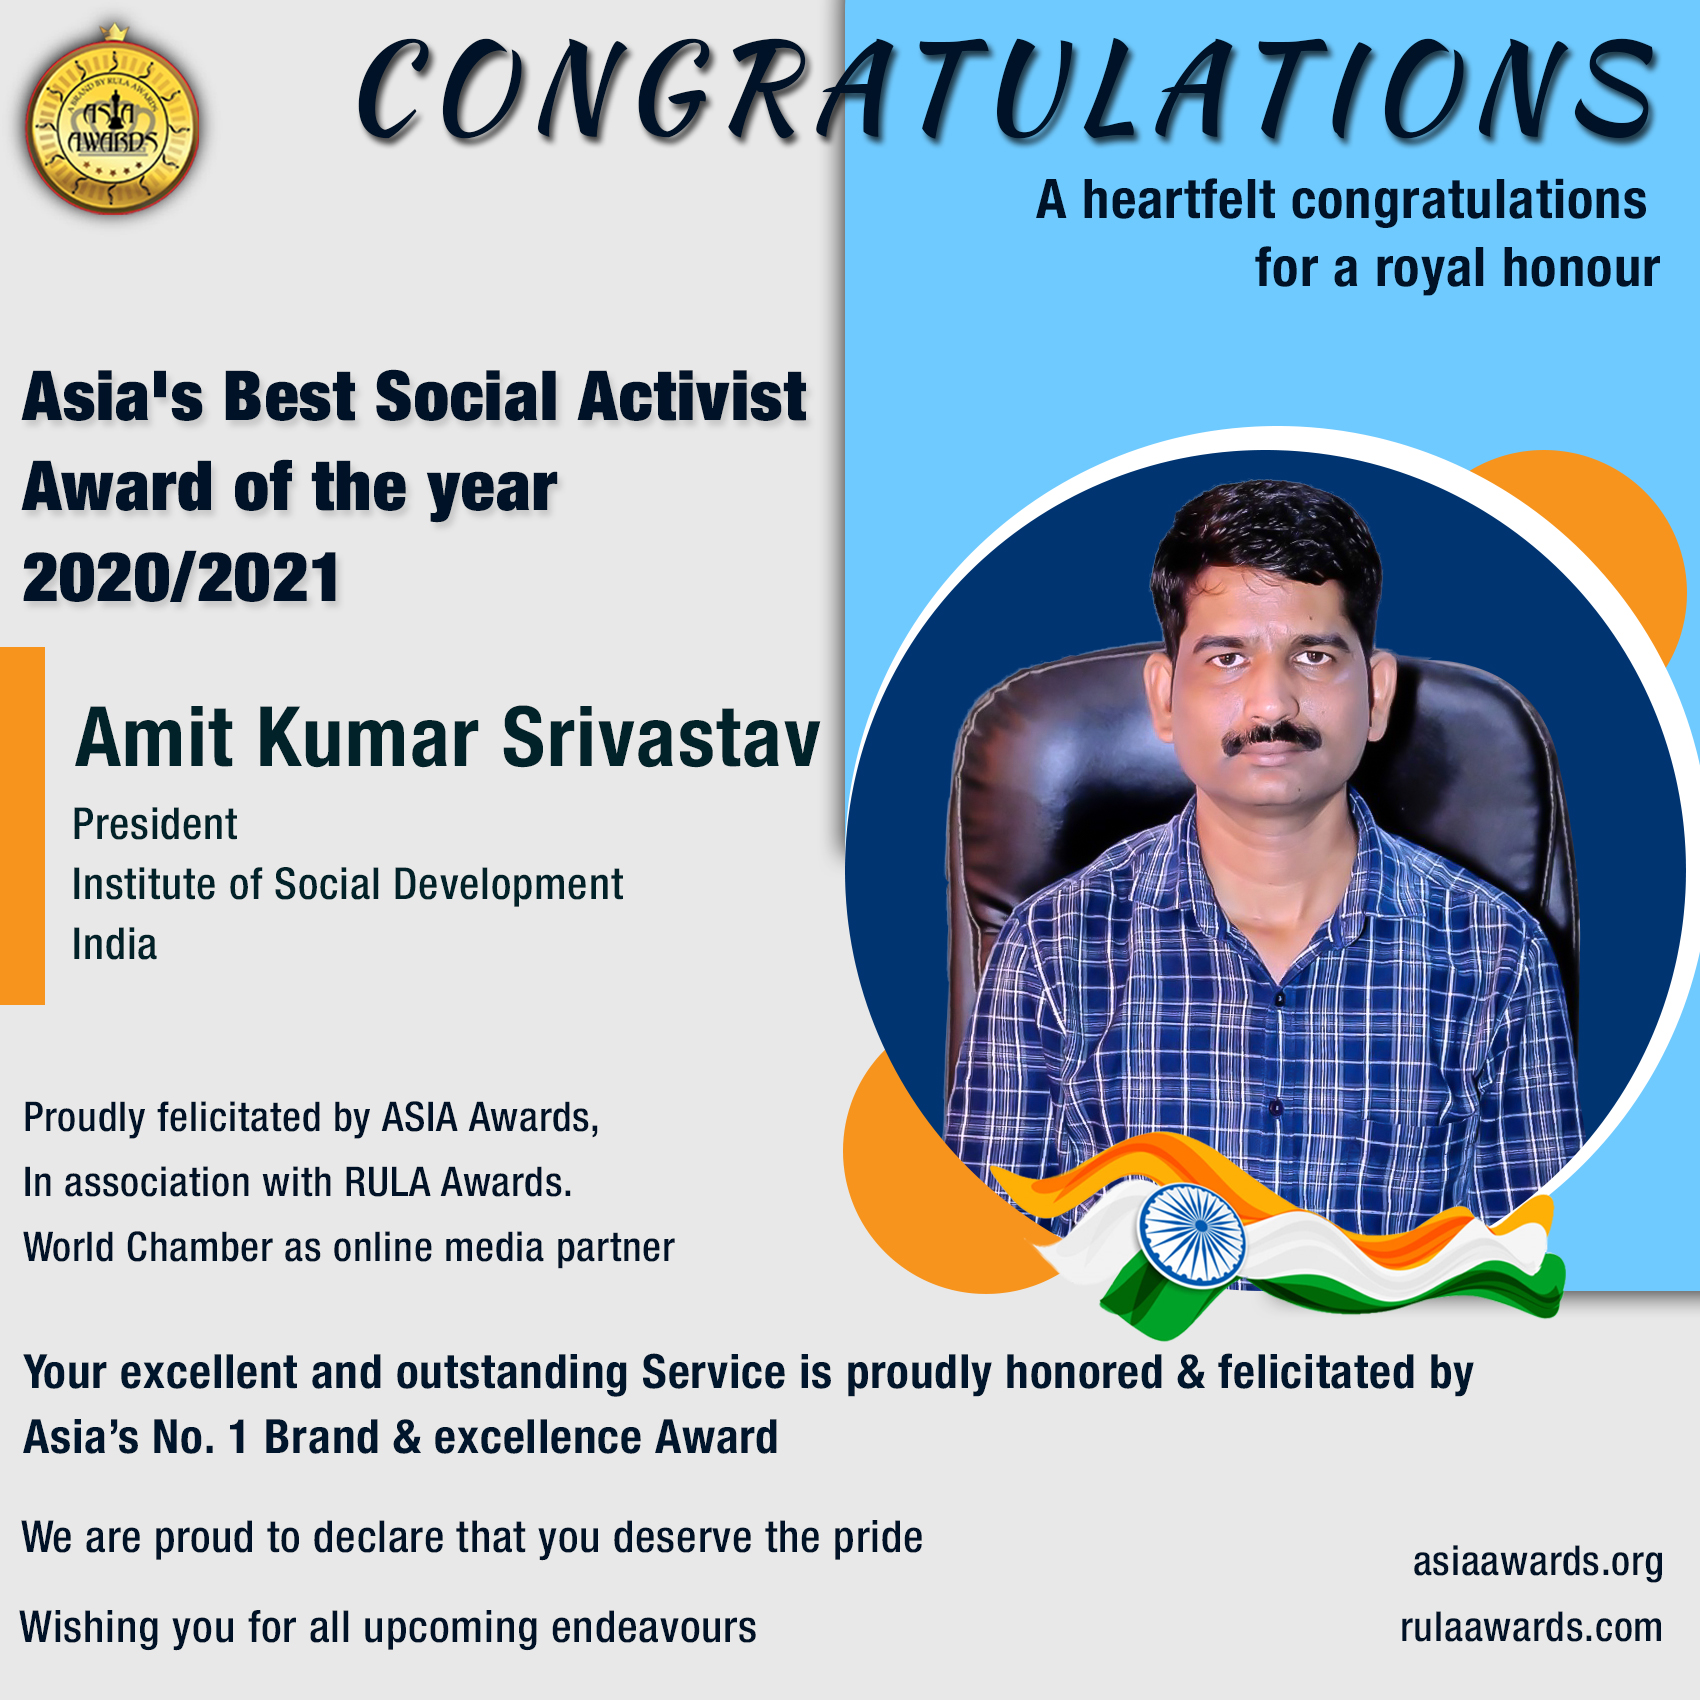 Amit Kumar Srivastav has bagged Asia's Best Social Activist Award of the Year